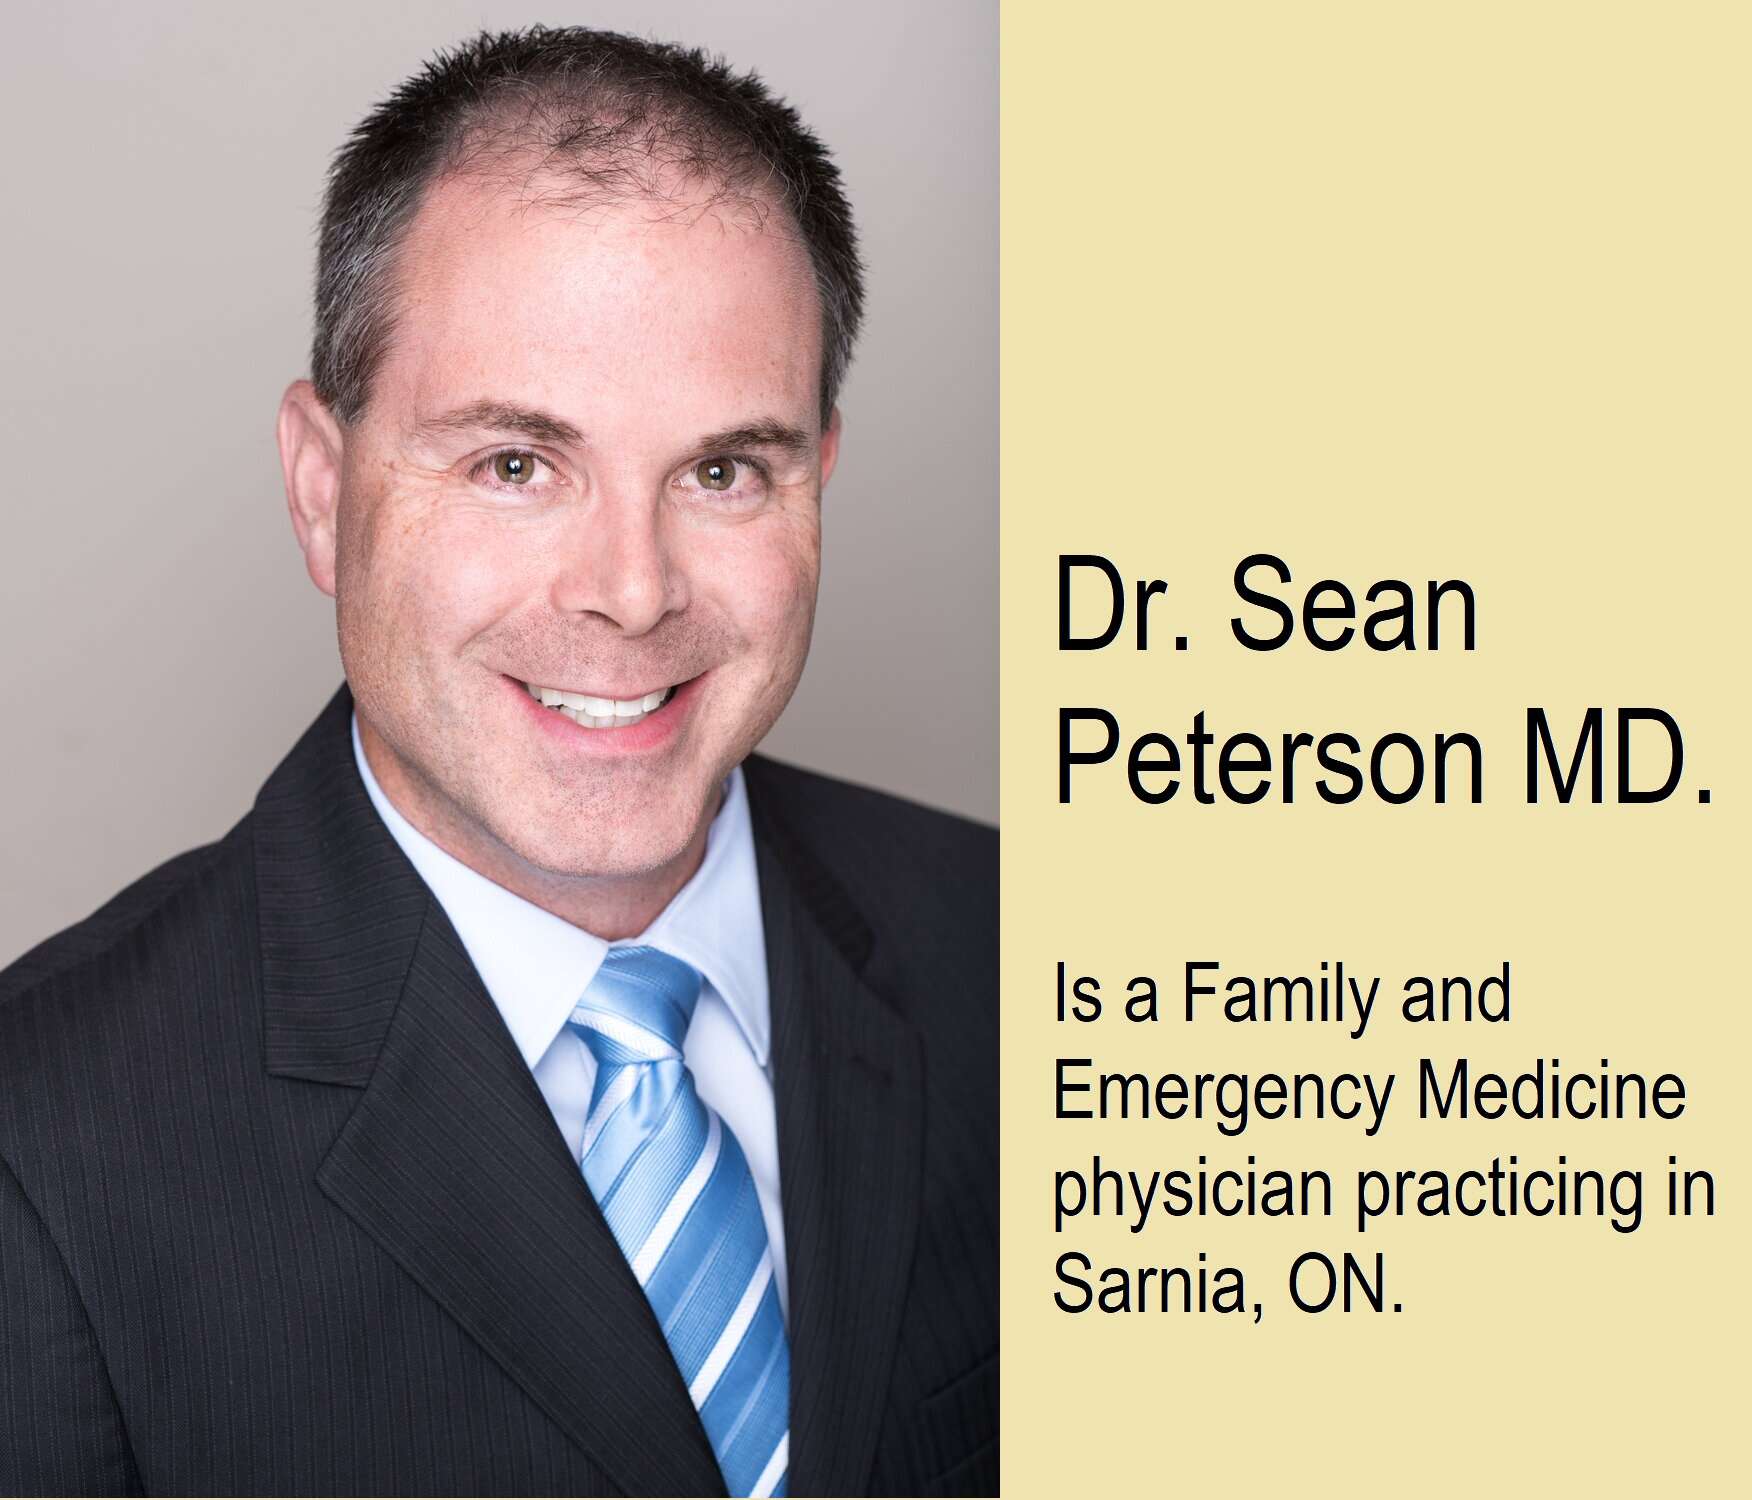 Dr. Sean Peterson MD